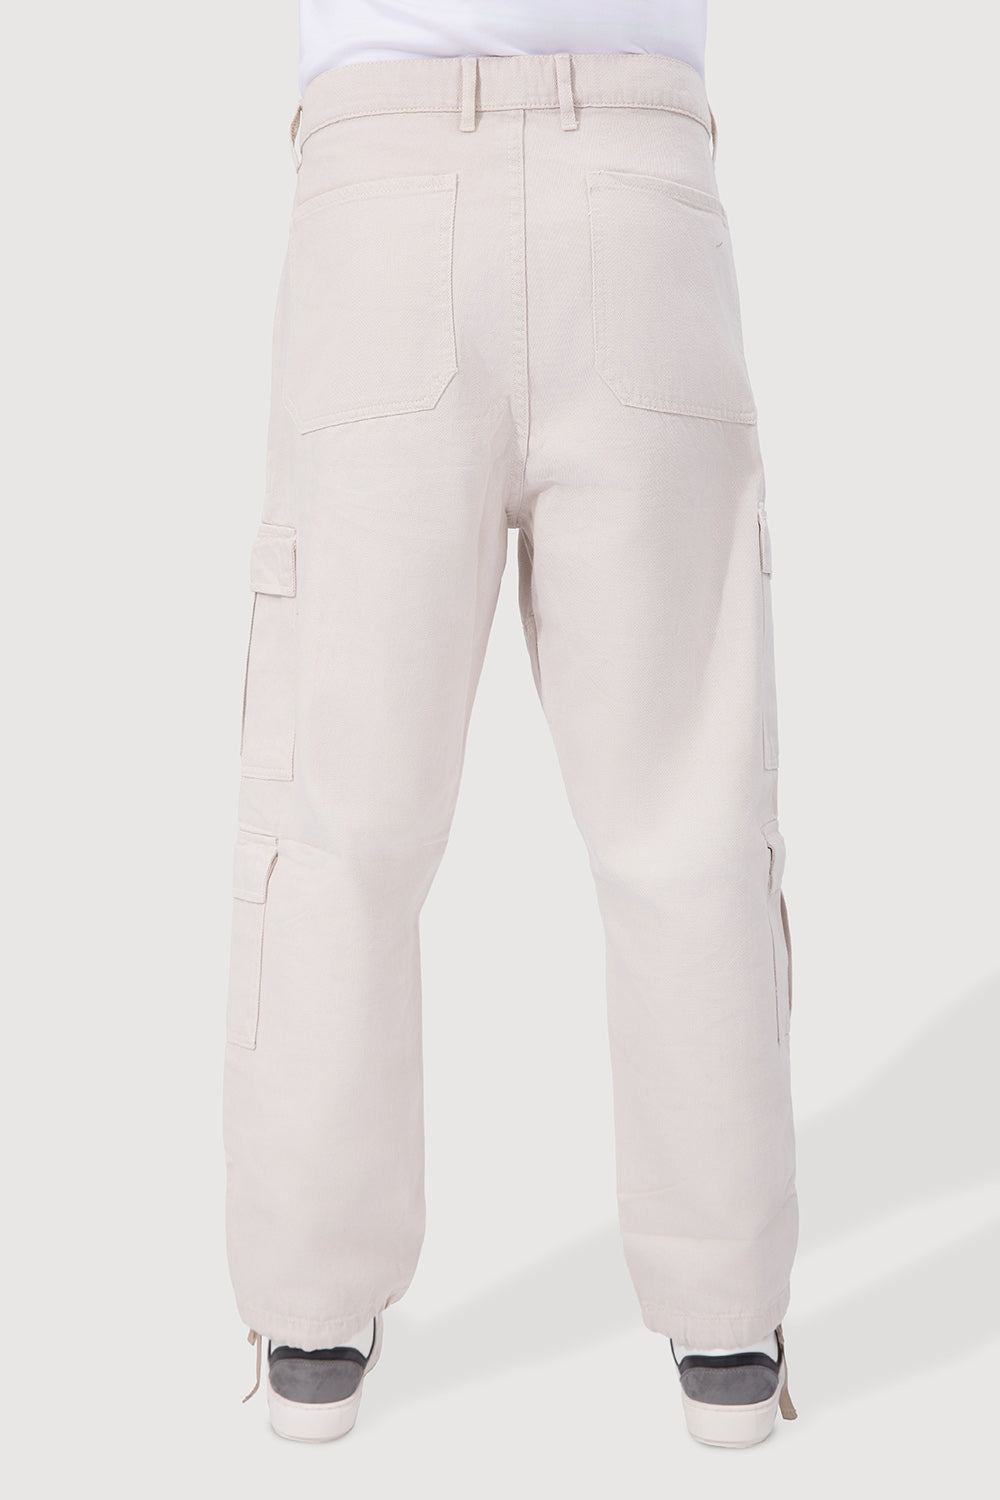 OFF-White Cargo Pants